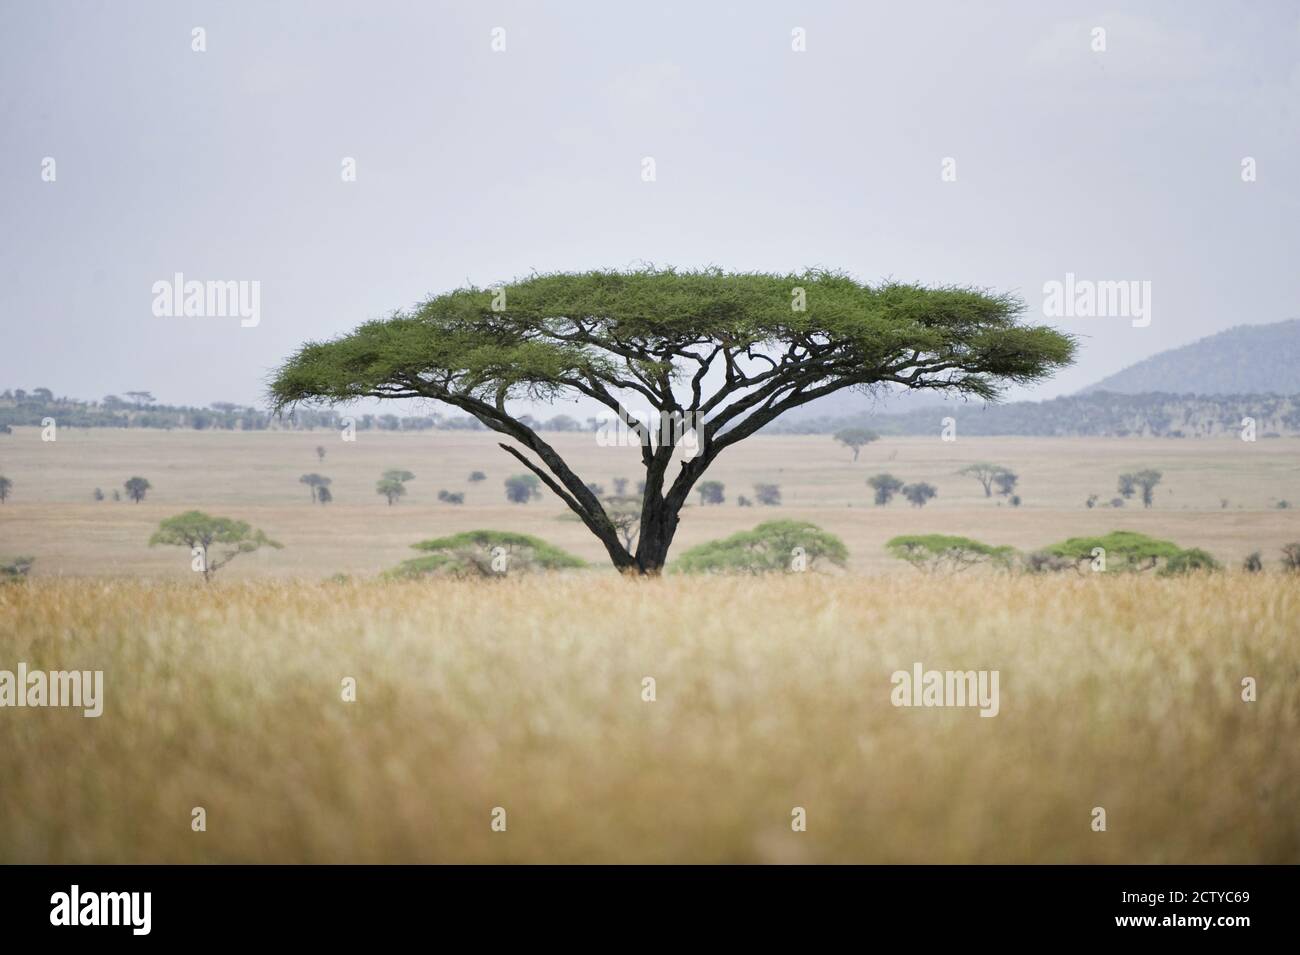 Parapluie Thorn acacia (Acacia tortilis) arbres dans un champ, Tanzanie Banque D'Images